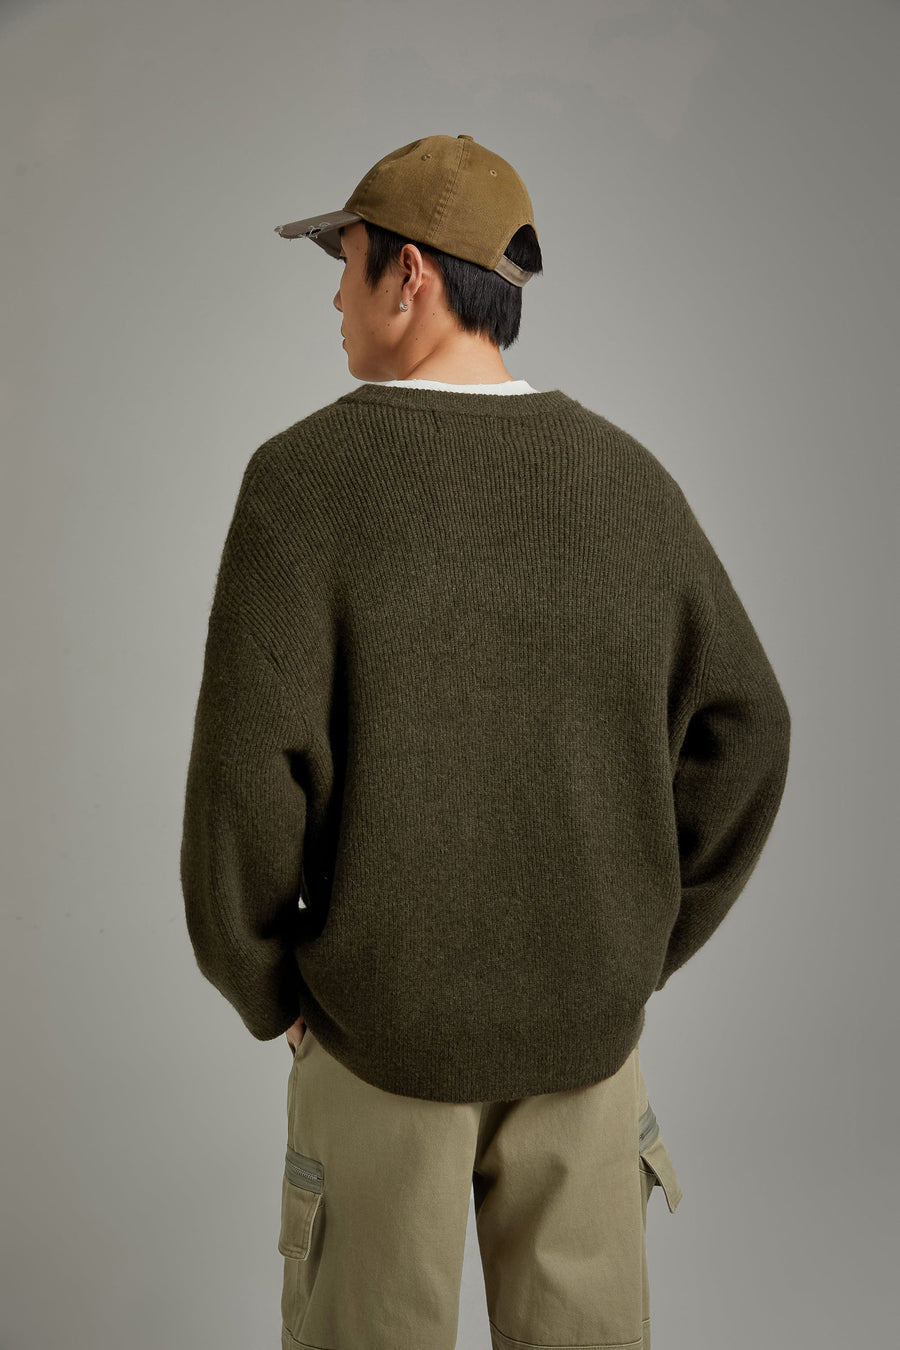 CHUU Pocket Loose Fit Knit Sweater